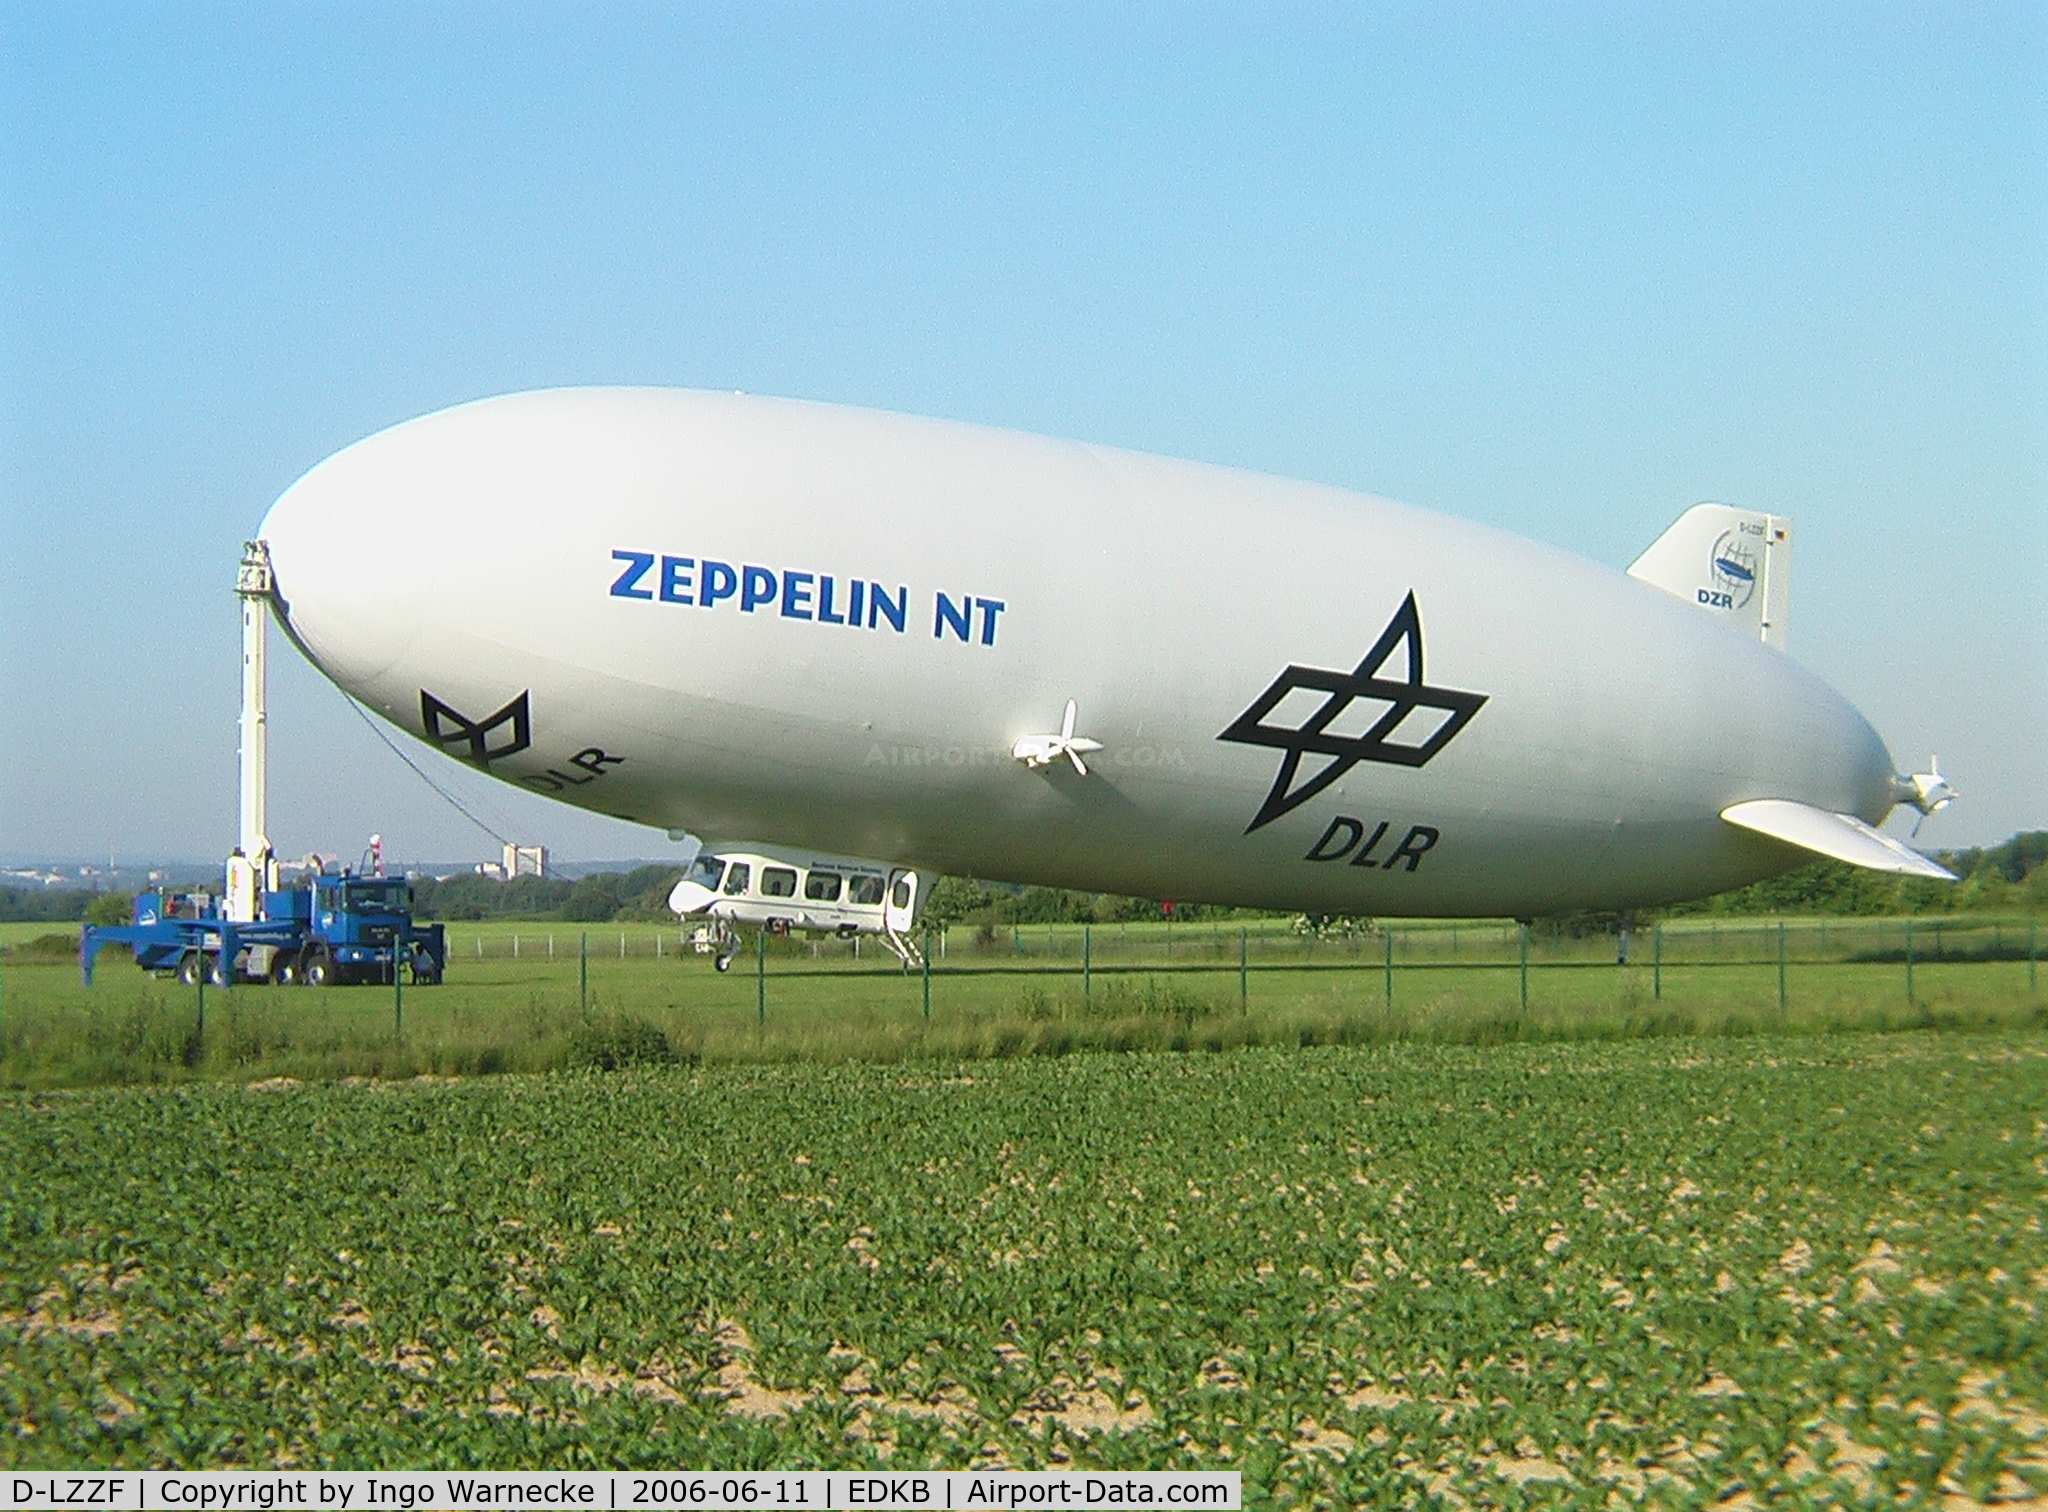 D-LZZF, 1998 Zeppelin NT07 C/N 3, Zeppelin NT - Deutsche Zeppelin Reederei / DLR at Bonn/Hangelar airfield